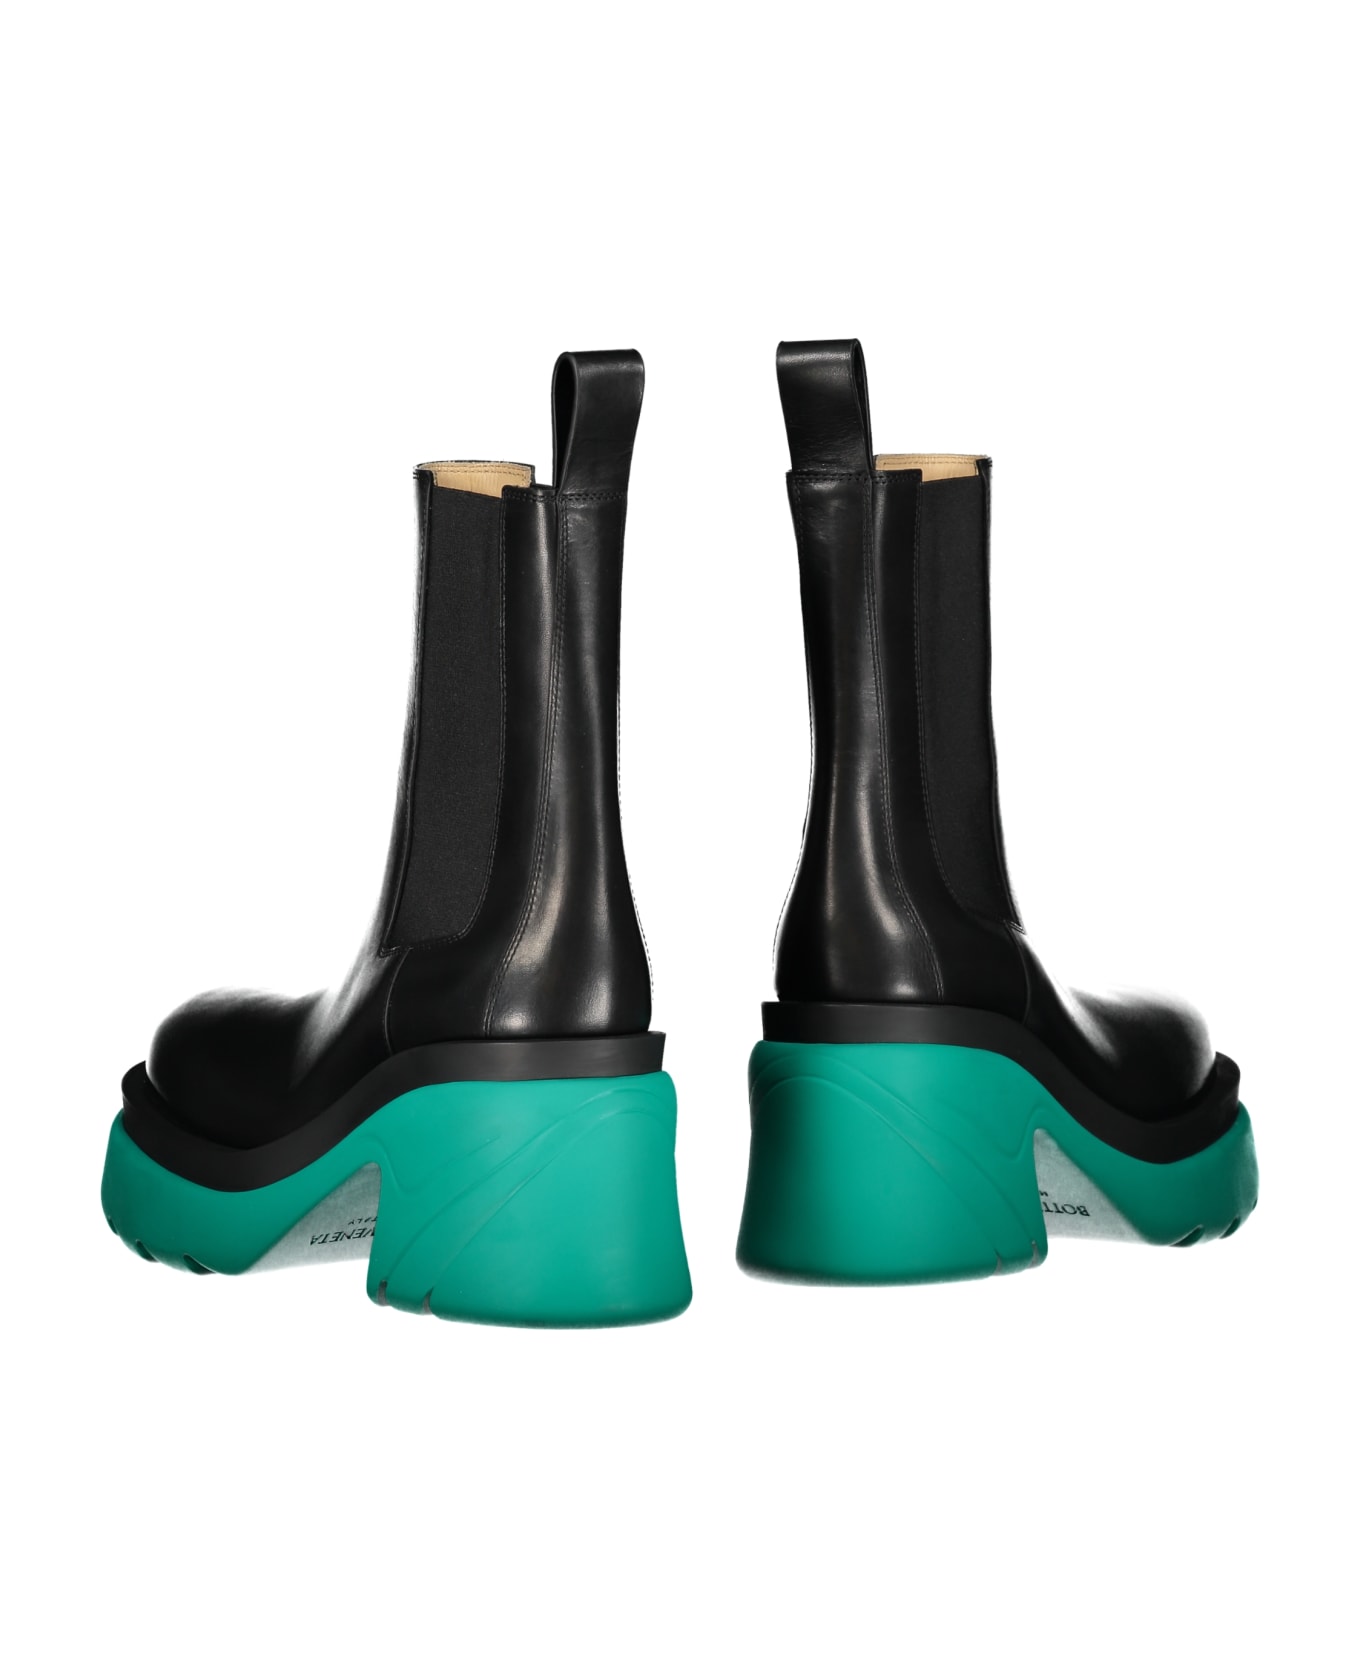 Bottega Veneta Flash Ankle Boots - black ブーツ